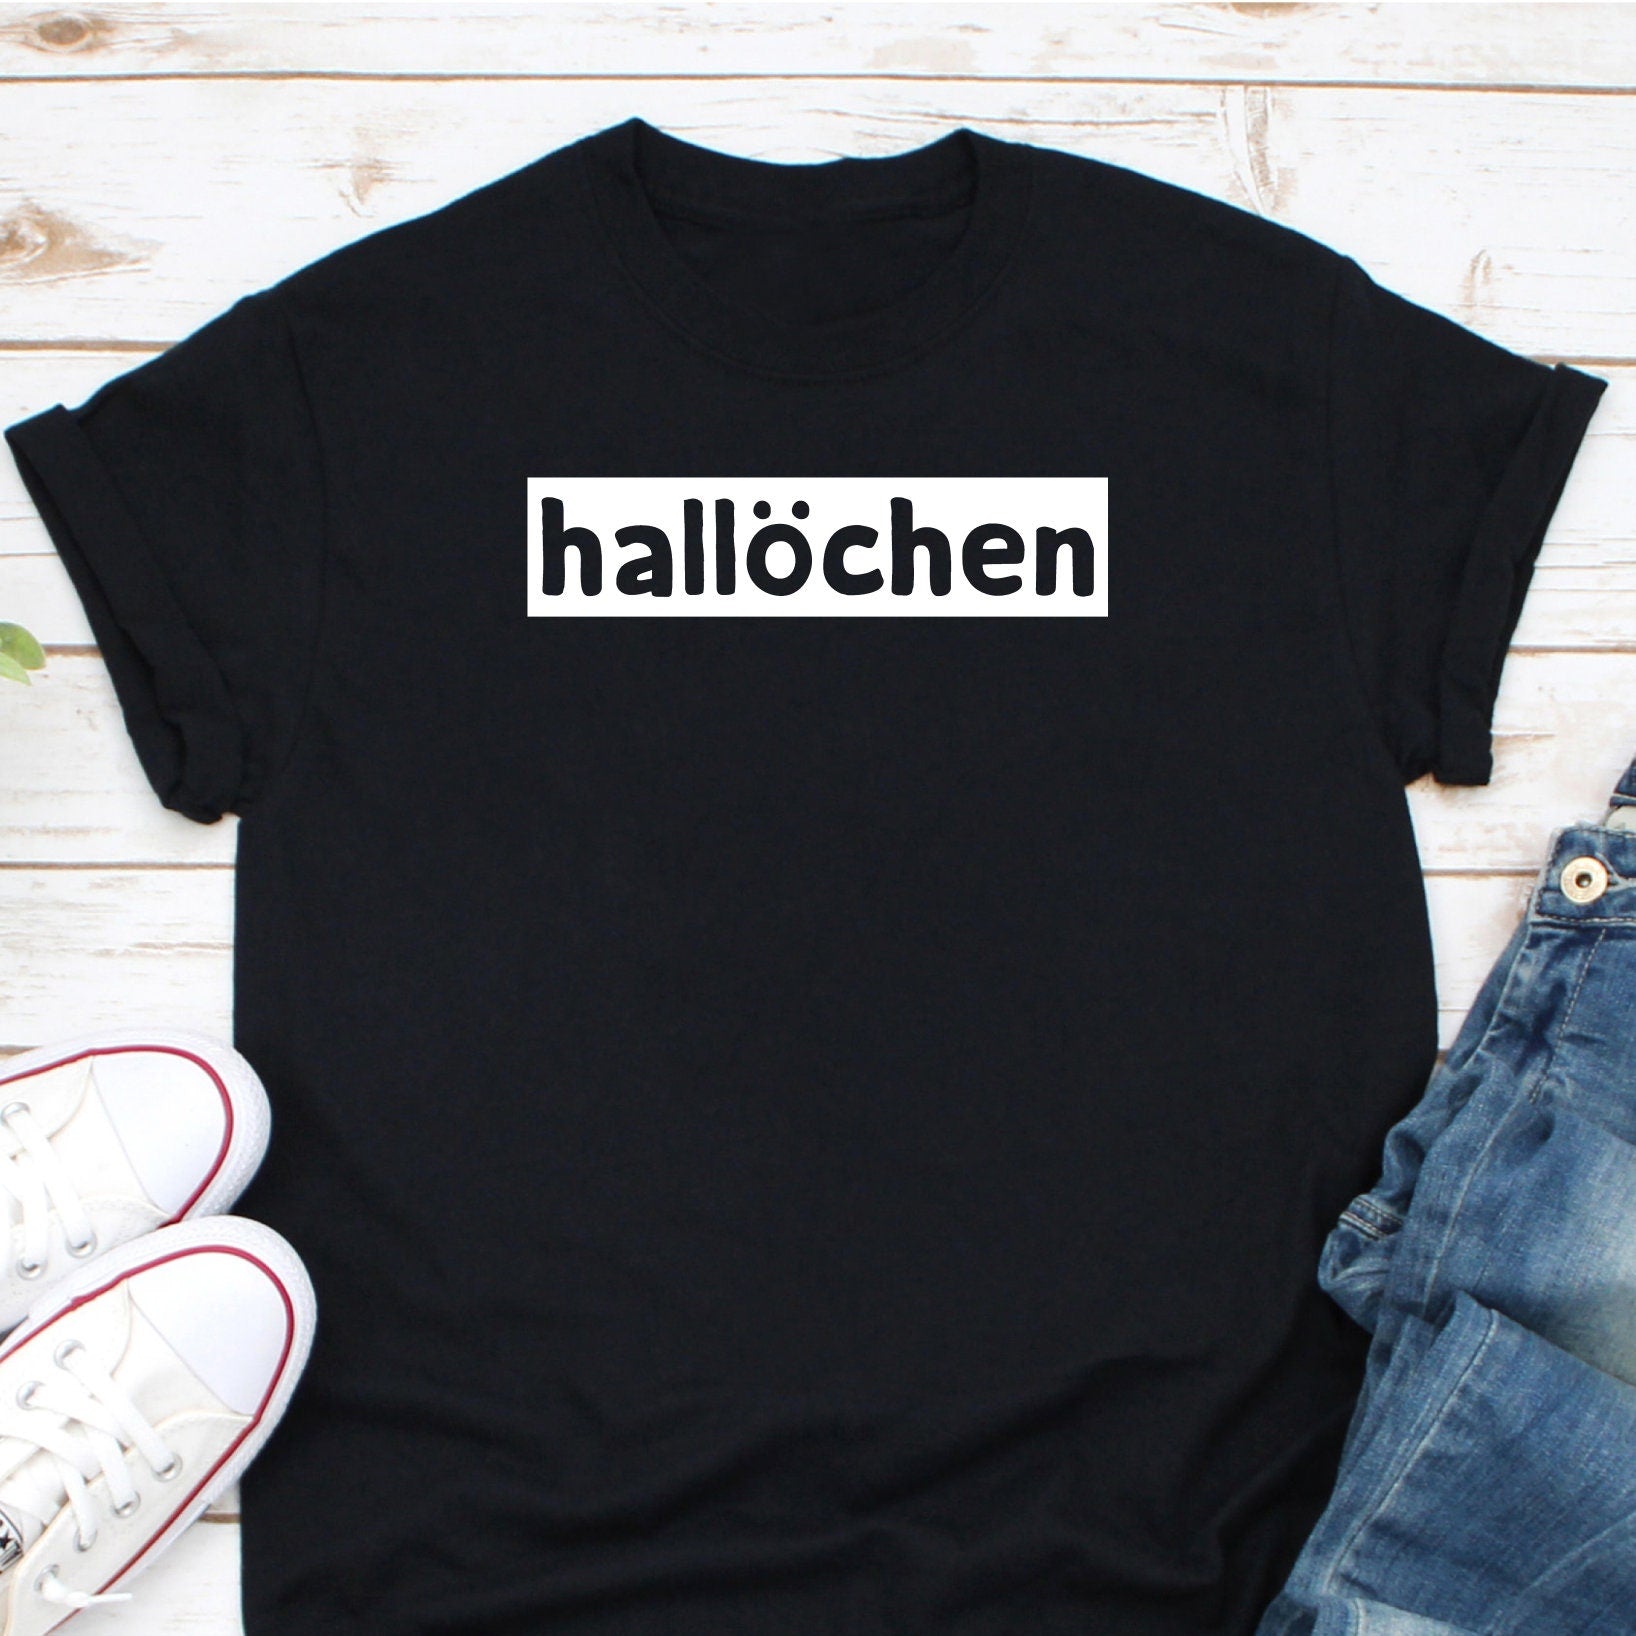 Hallochen Shirt, German Shirt, Germany Shirt, German Friend Shirt, Travel Germany Shirt, Oktoberfest Shirt